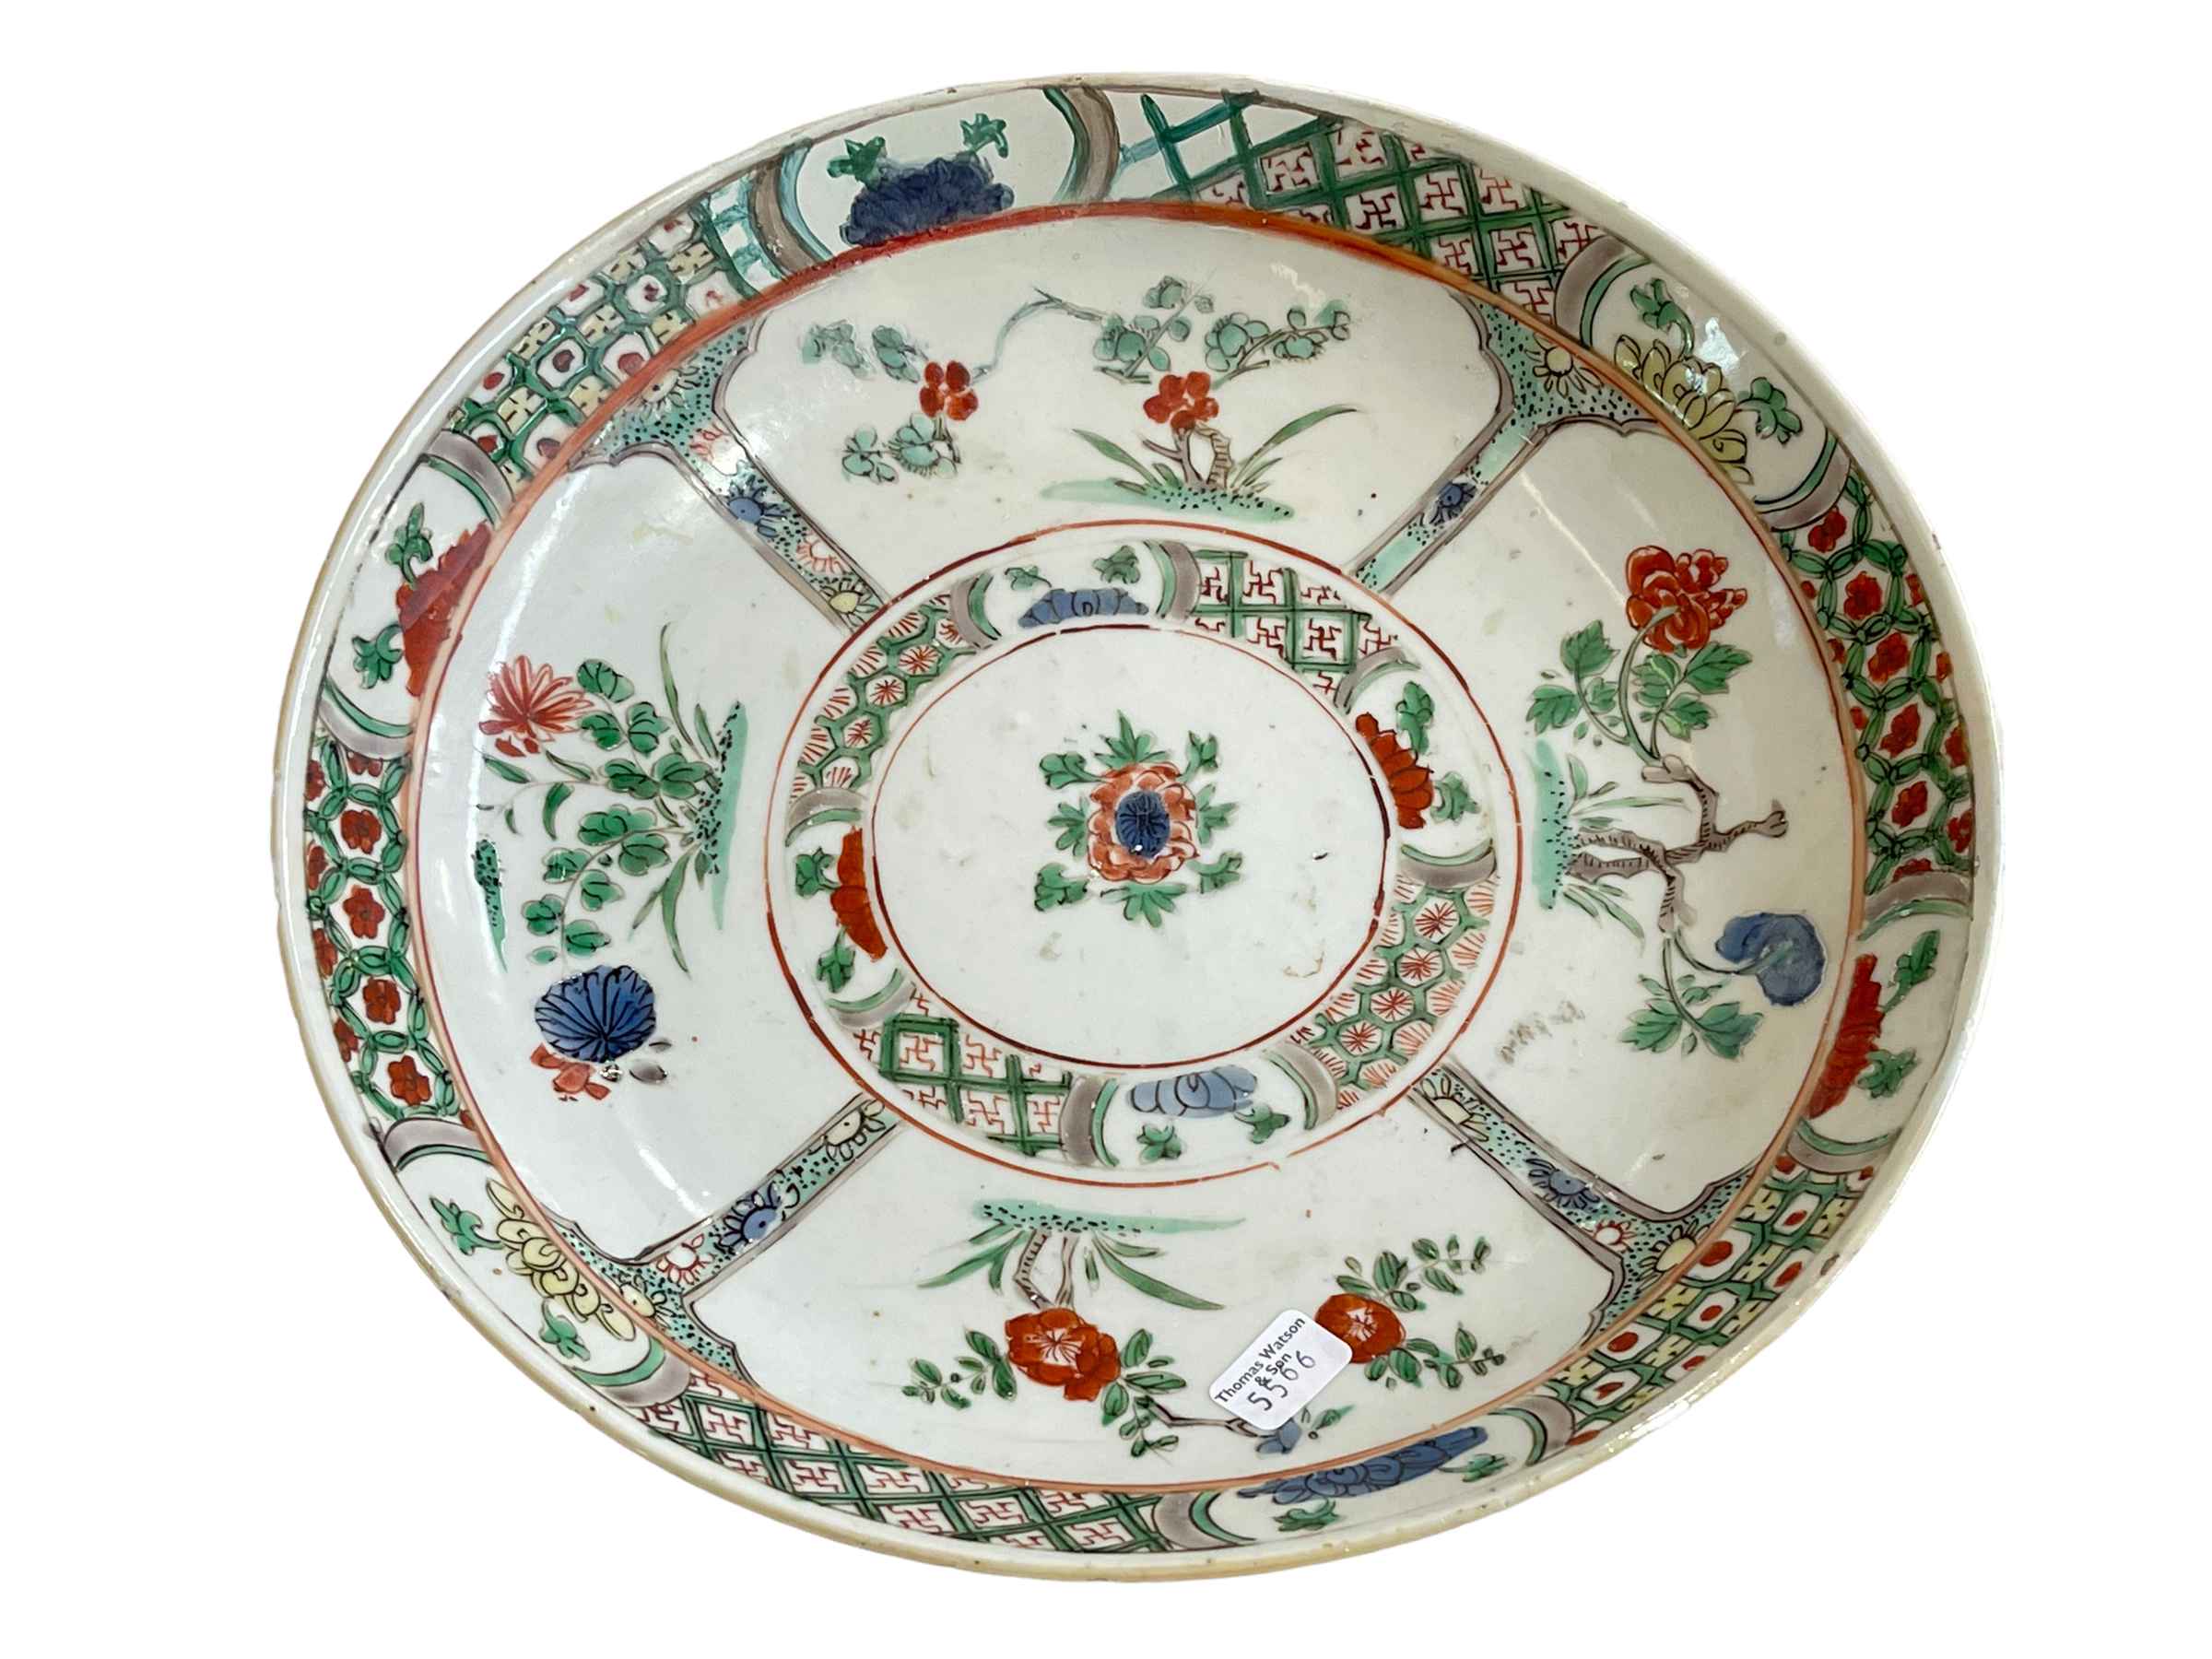 Antique Chinese porcelain saucer dish, 25cm diameter.